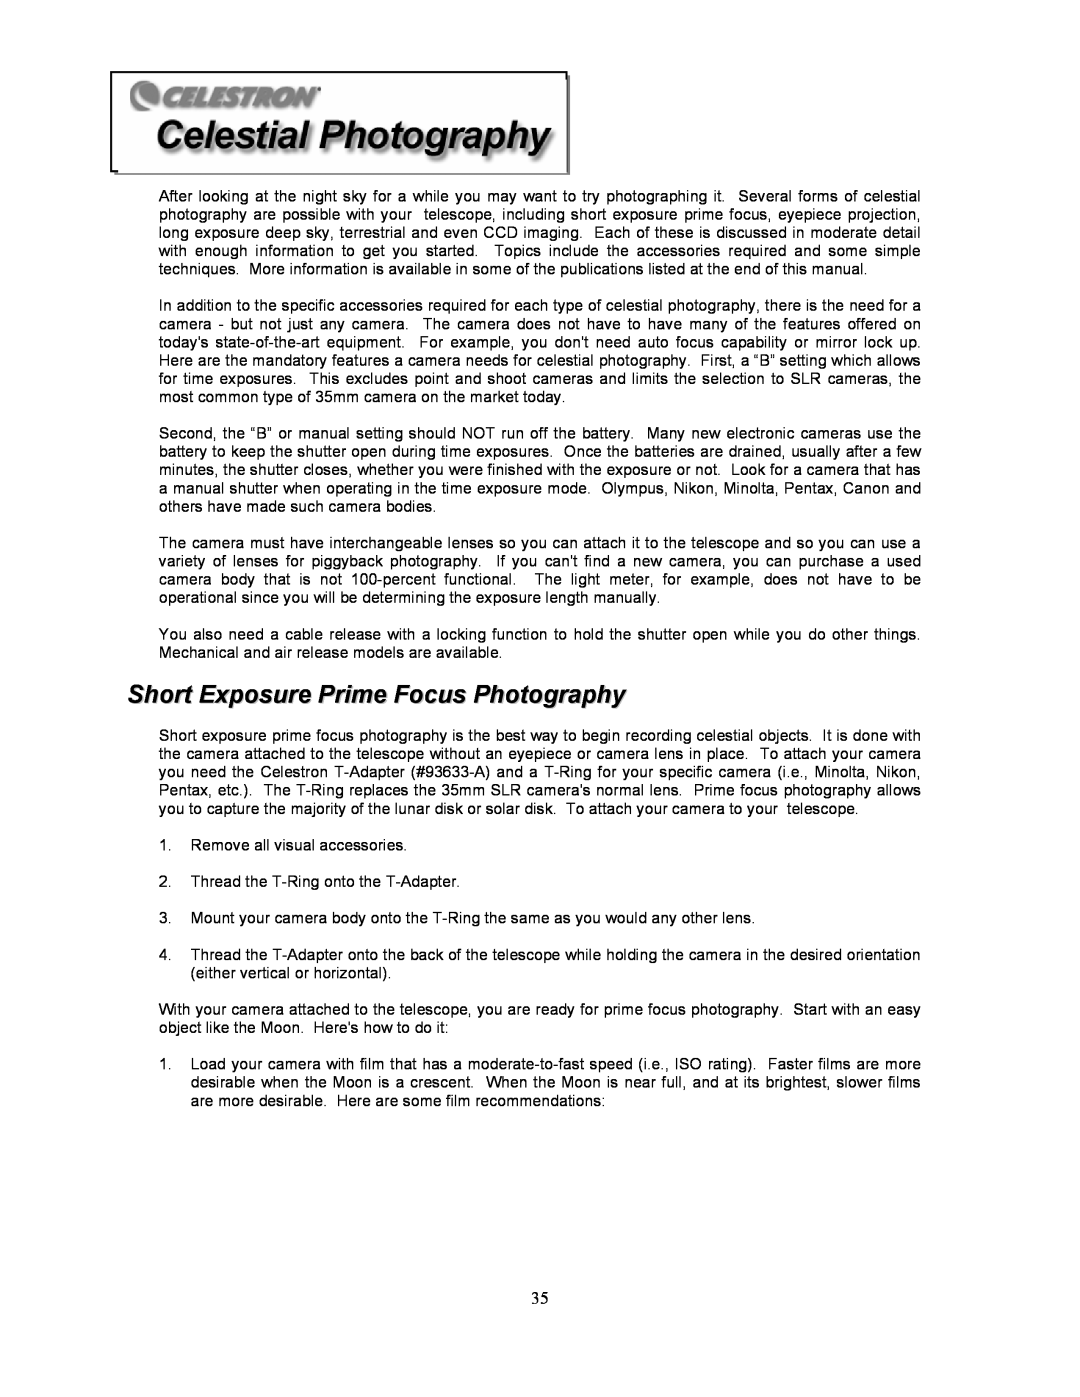 Celestron NexStar 8i manual Short Exposure Prime Focus Photography 